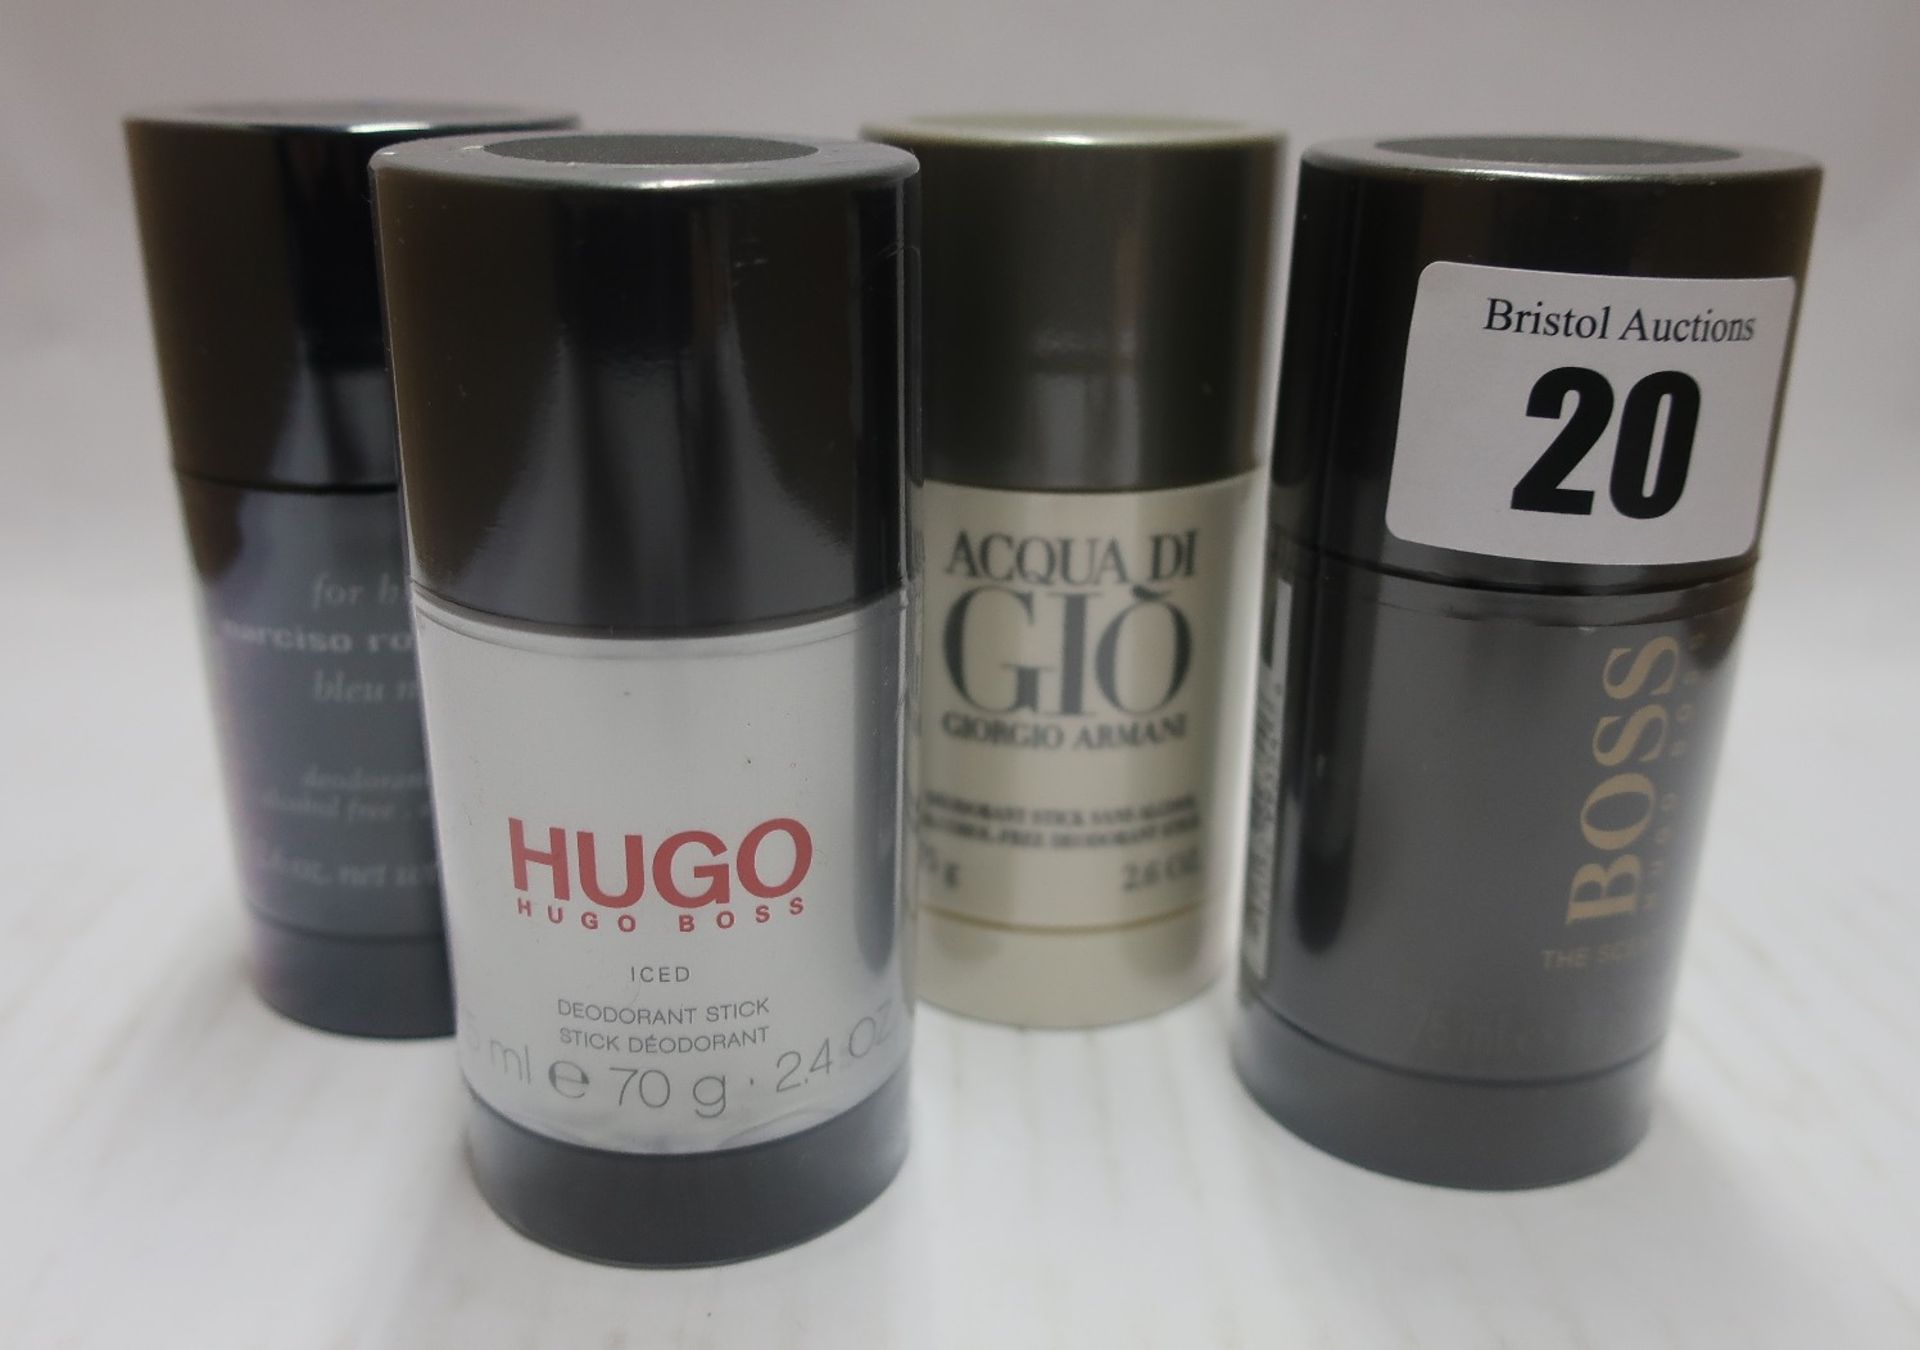 Four assorted deodorant sticks to include Hugo Boss, Acqua di Gio and Narciso Rodrigues.